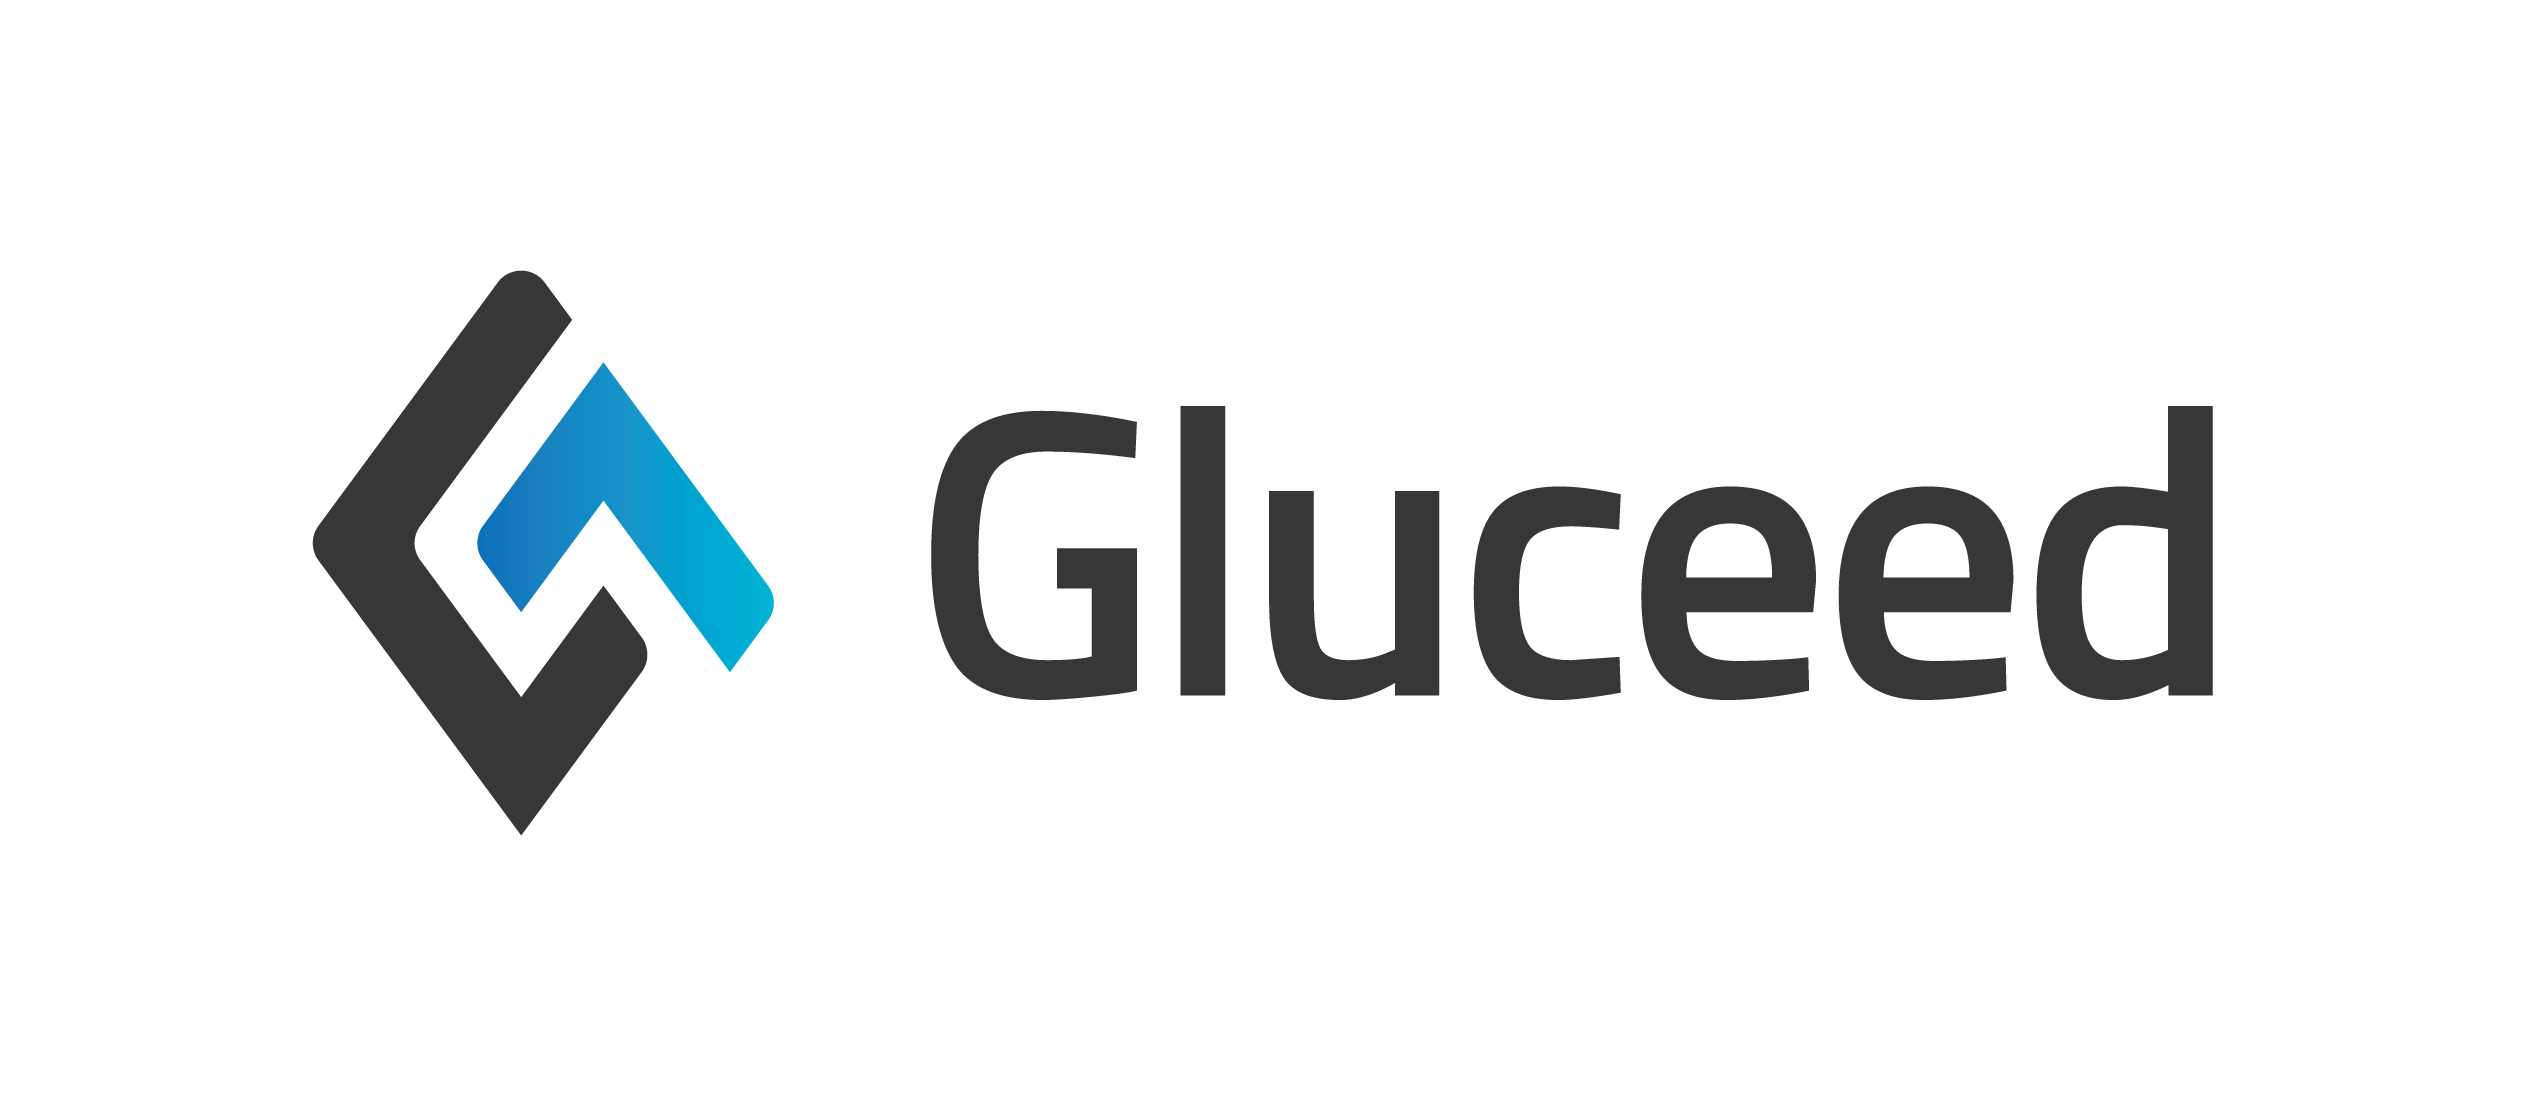 gluceed platforms dispo